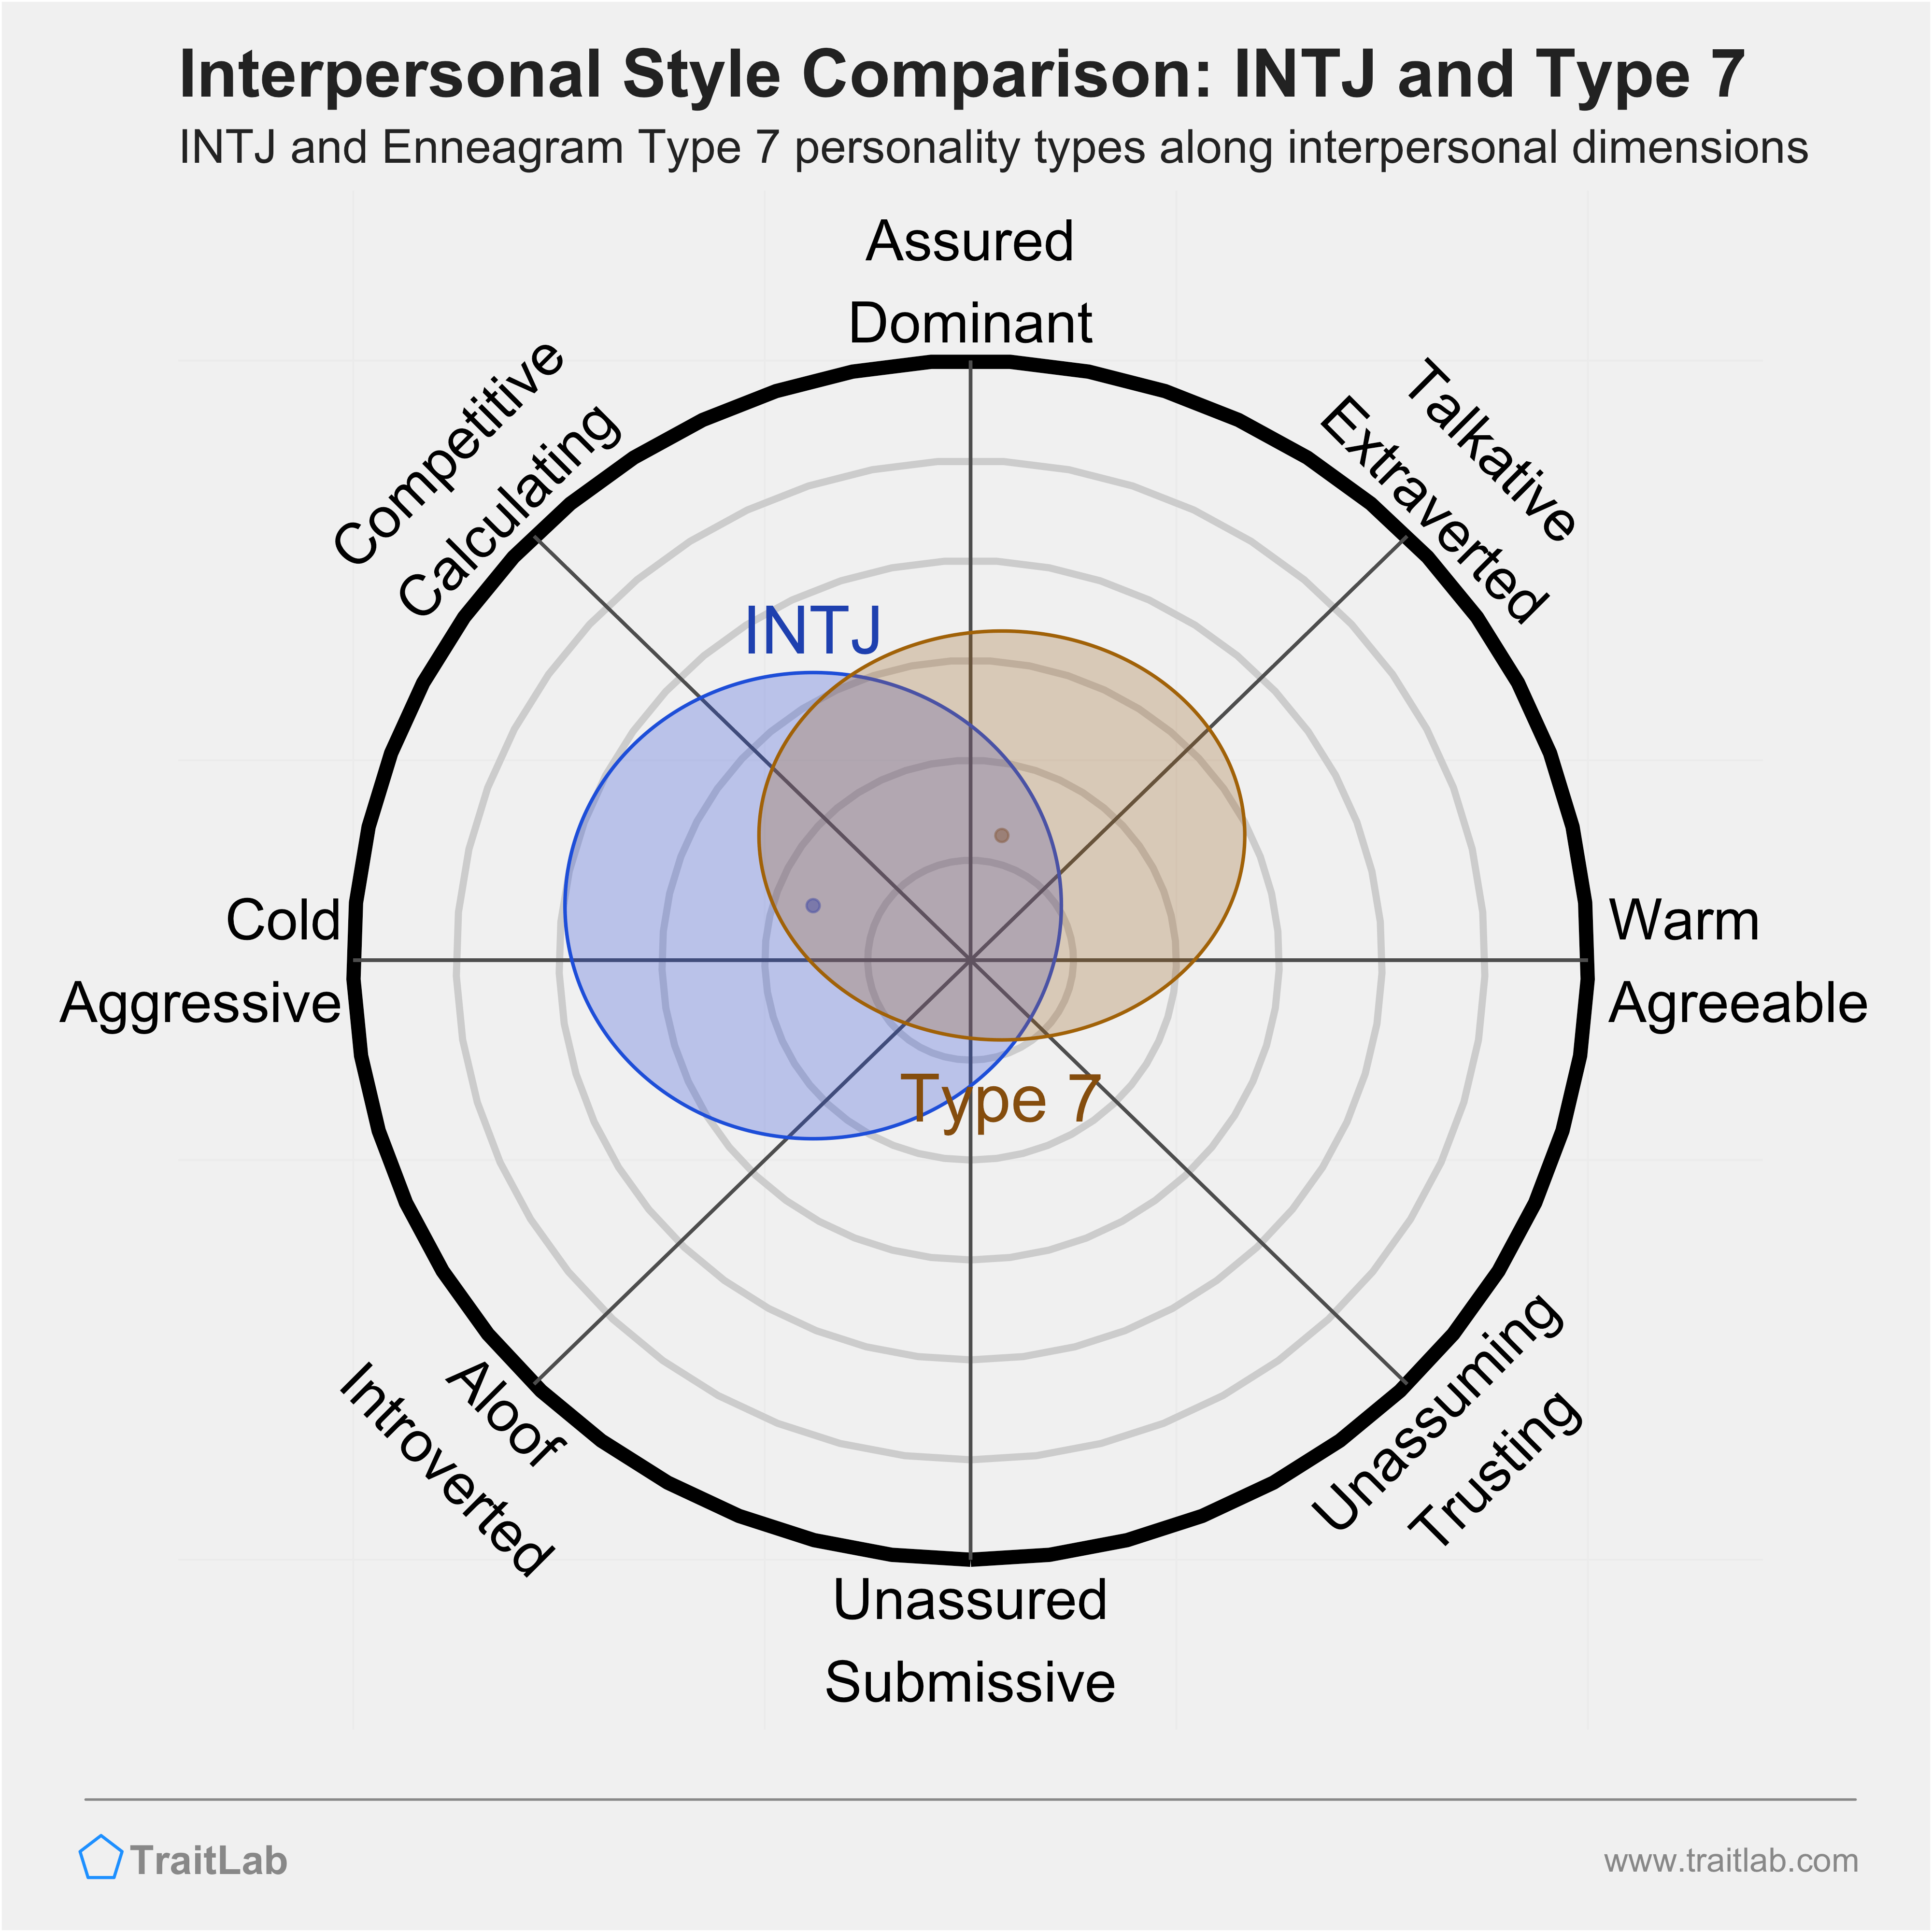 Enneagram INTJ and Type 7 comparison across interpersonal dimensions